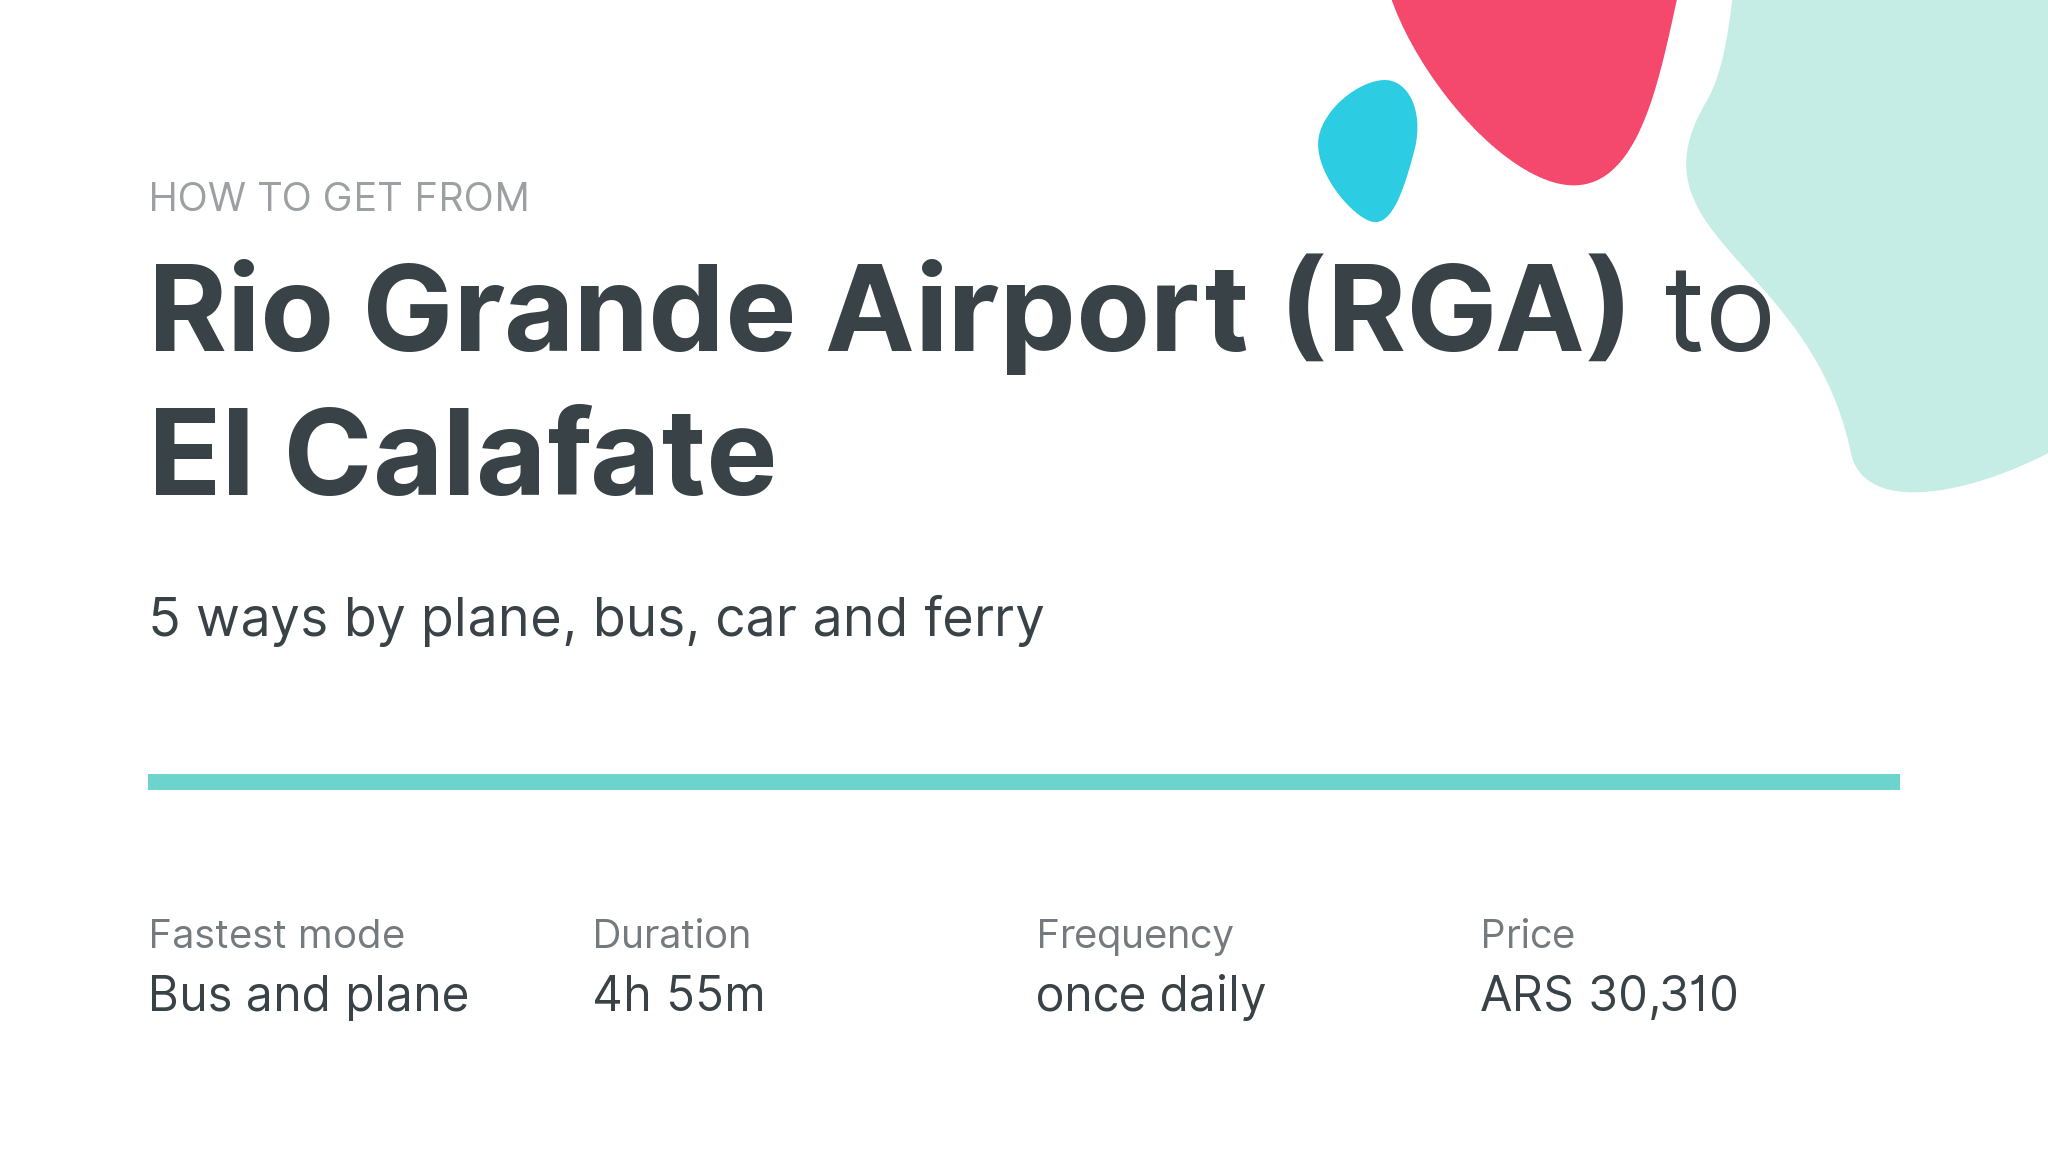 How do I get from Rio Grande Airport (RGA) to El Calafate